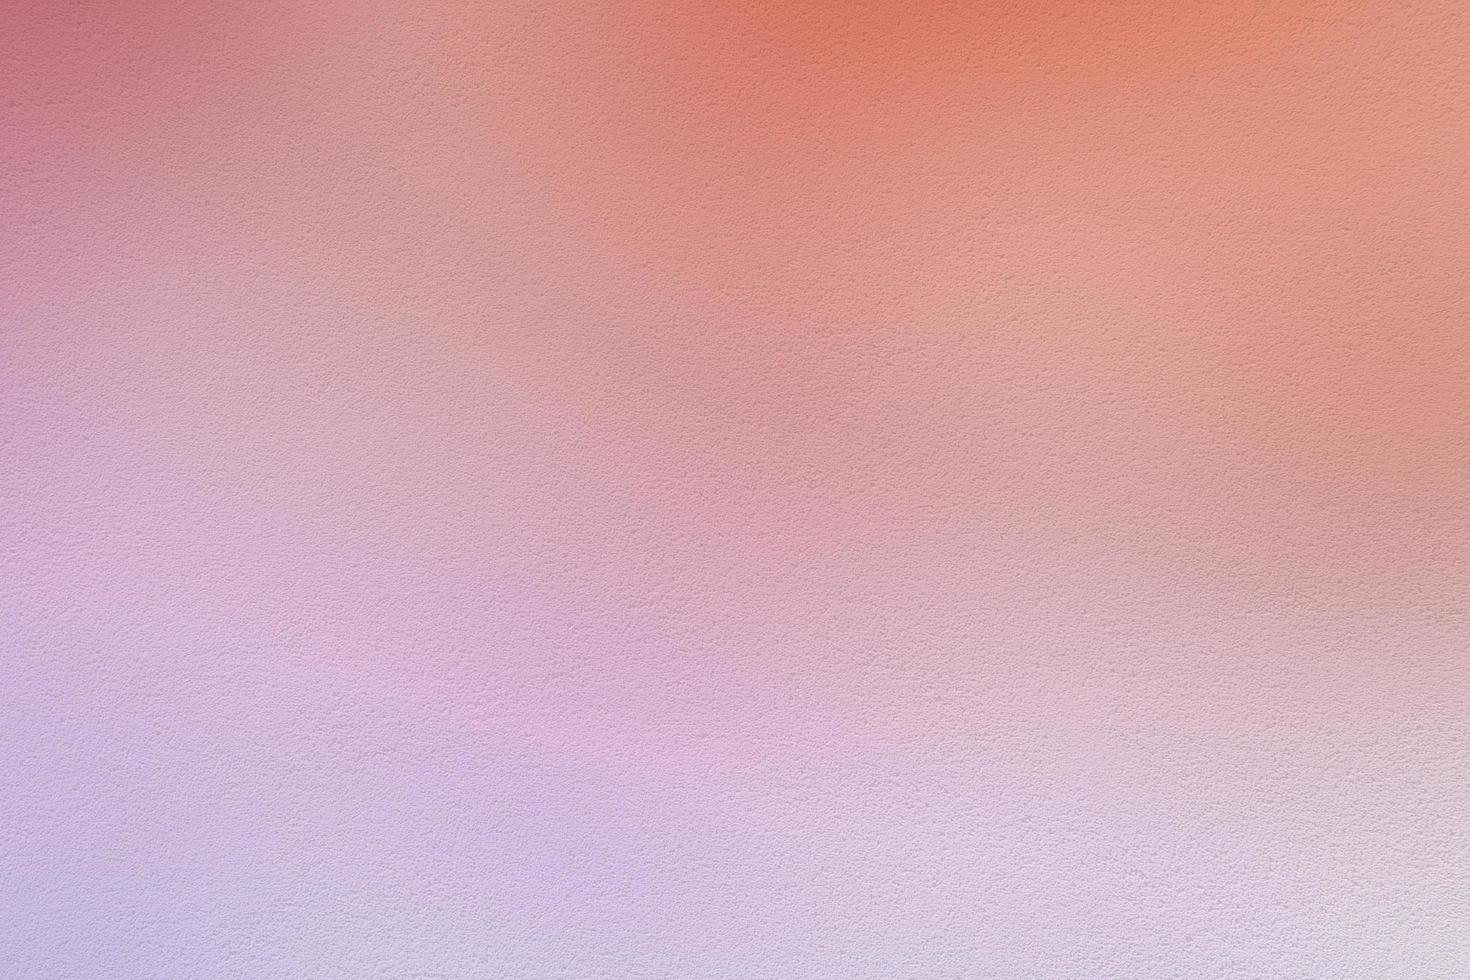 textura de papel degradado pastel rosa oscuro foto